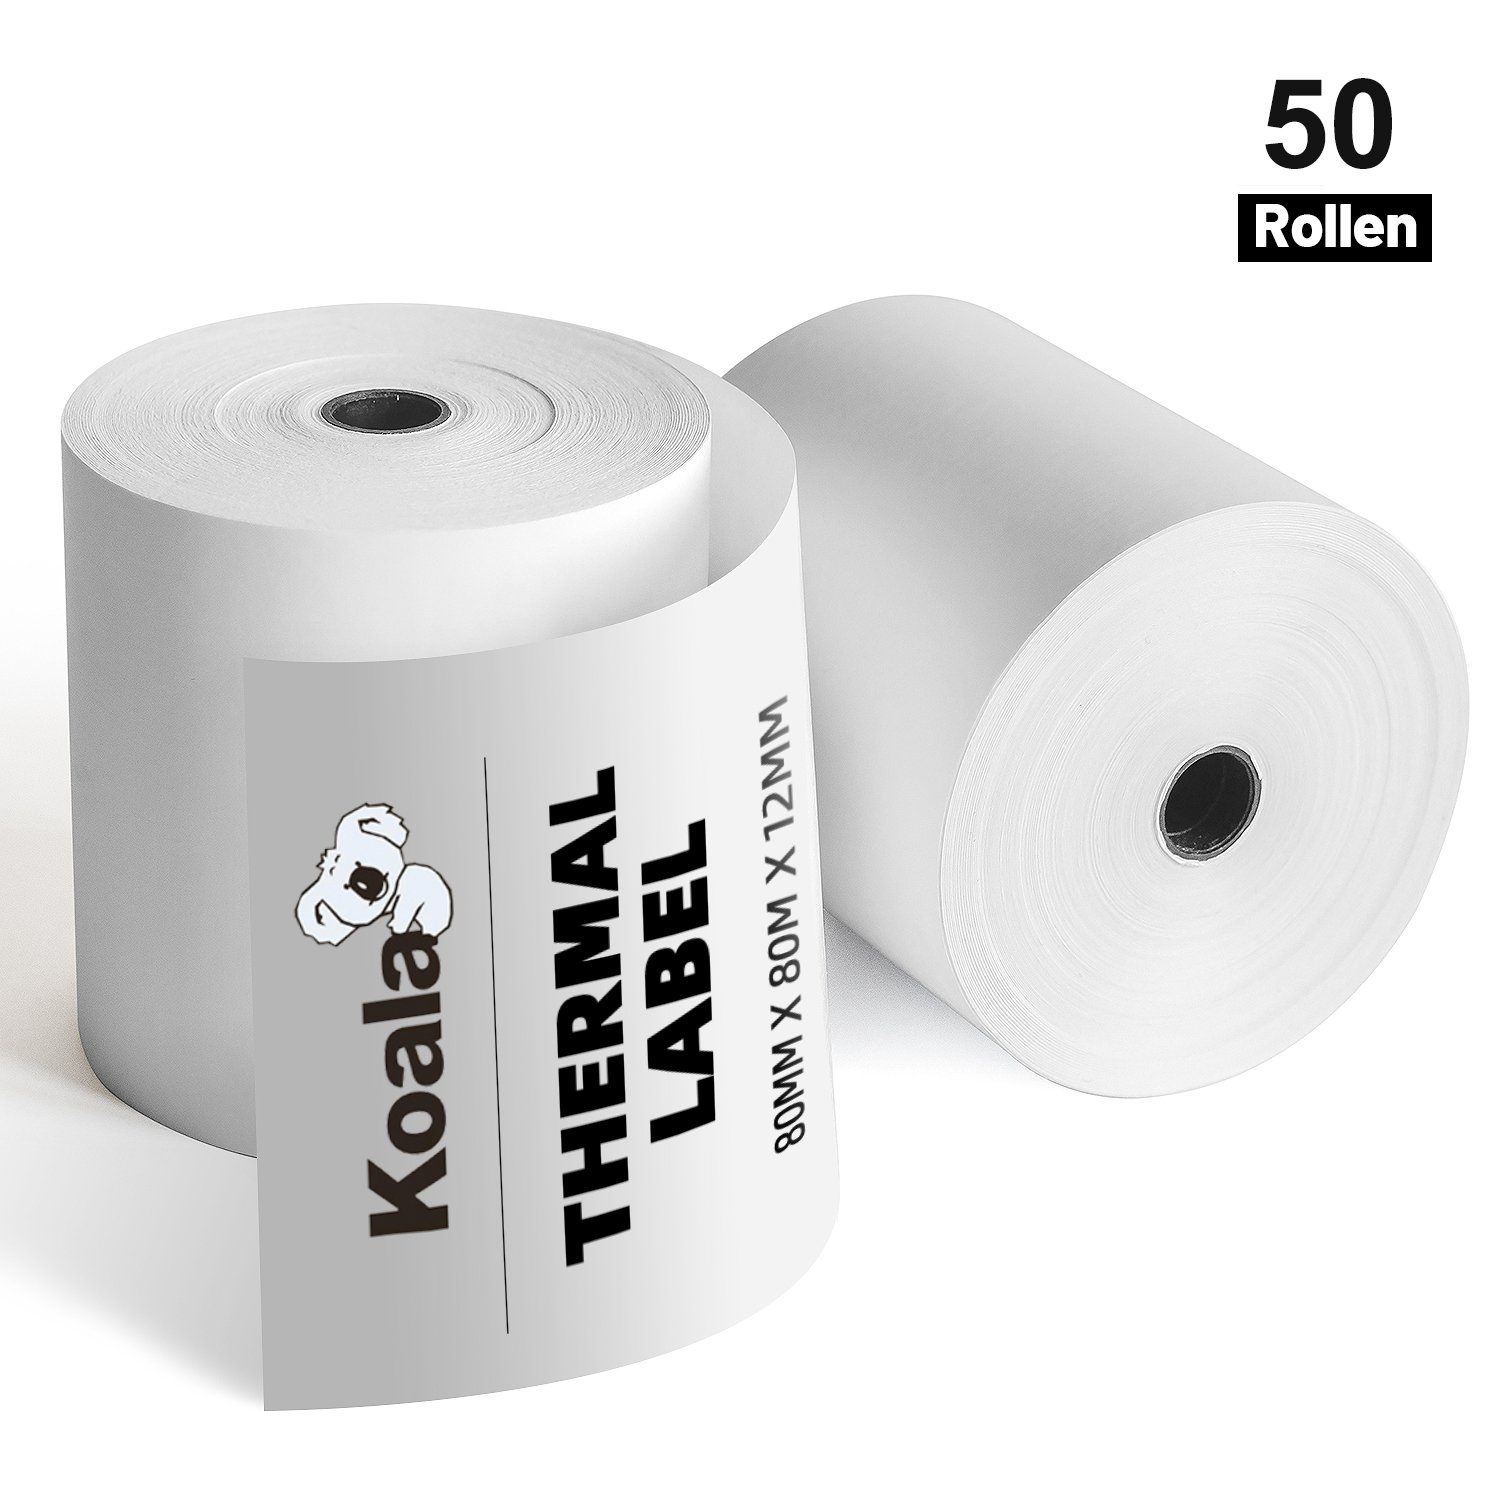 Koala Etikettenpapier 80x 50 Rollen Thermopapier Kassen, 80 Bonrolle mm Drucker für